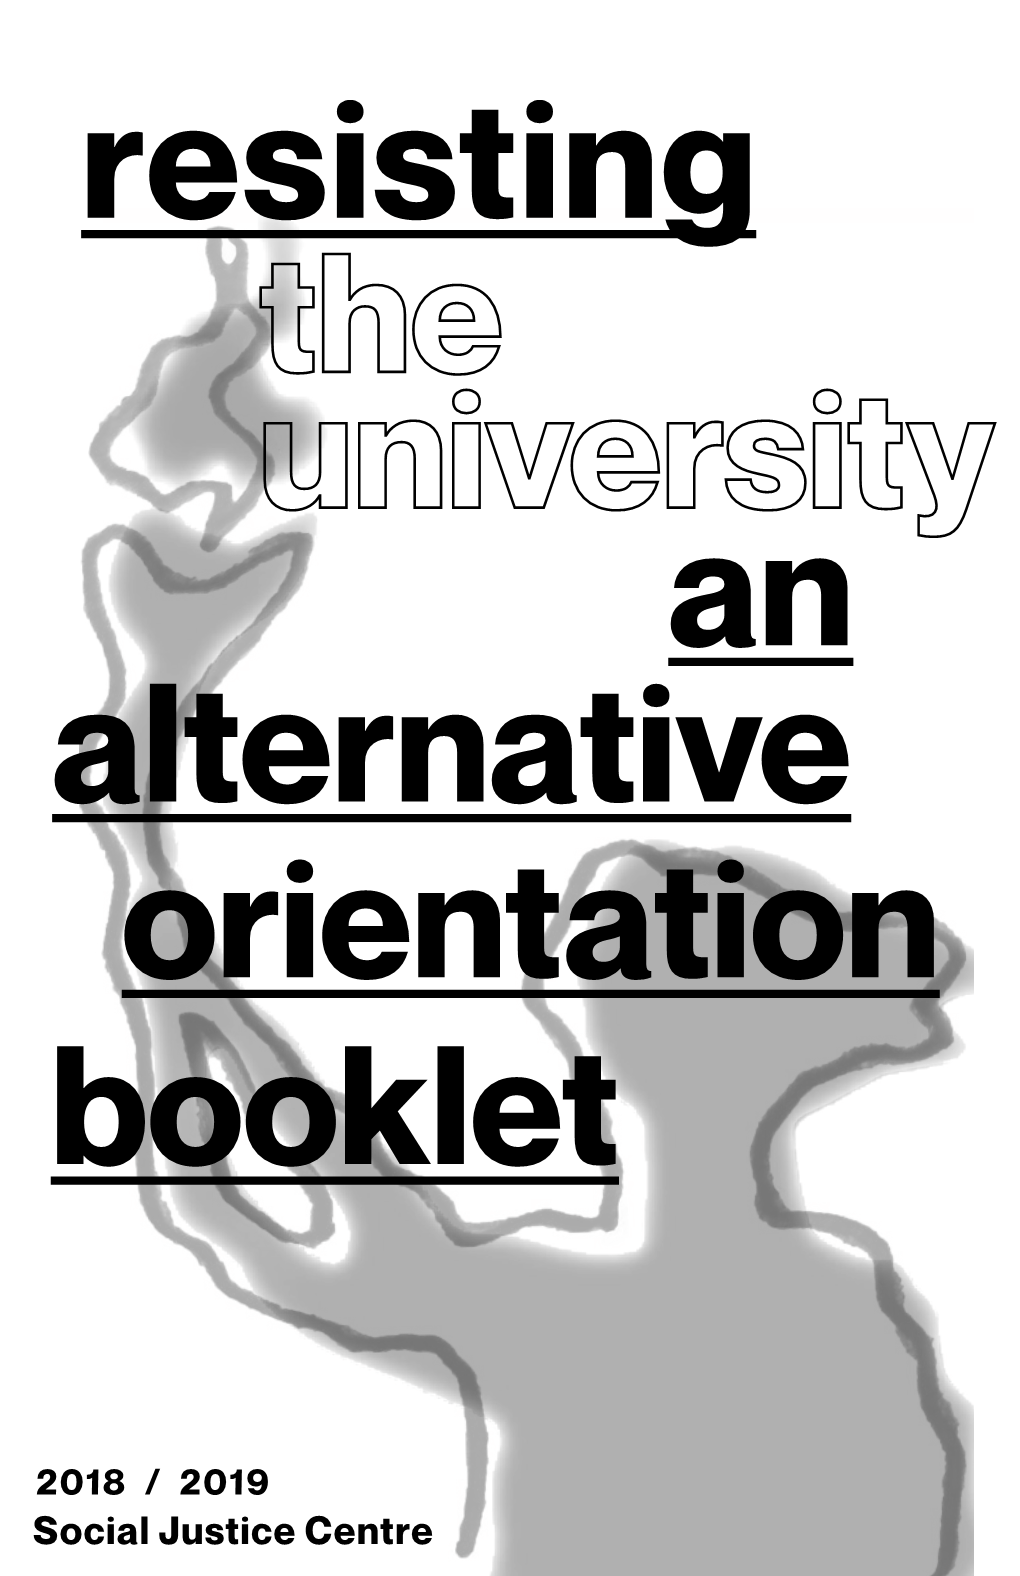 Resisting an Orientation Booklet Alternative